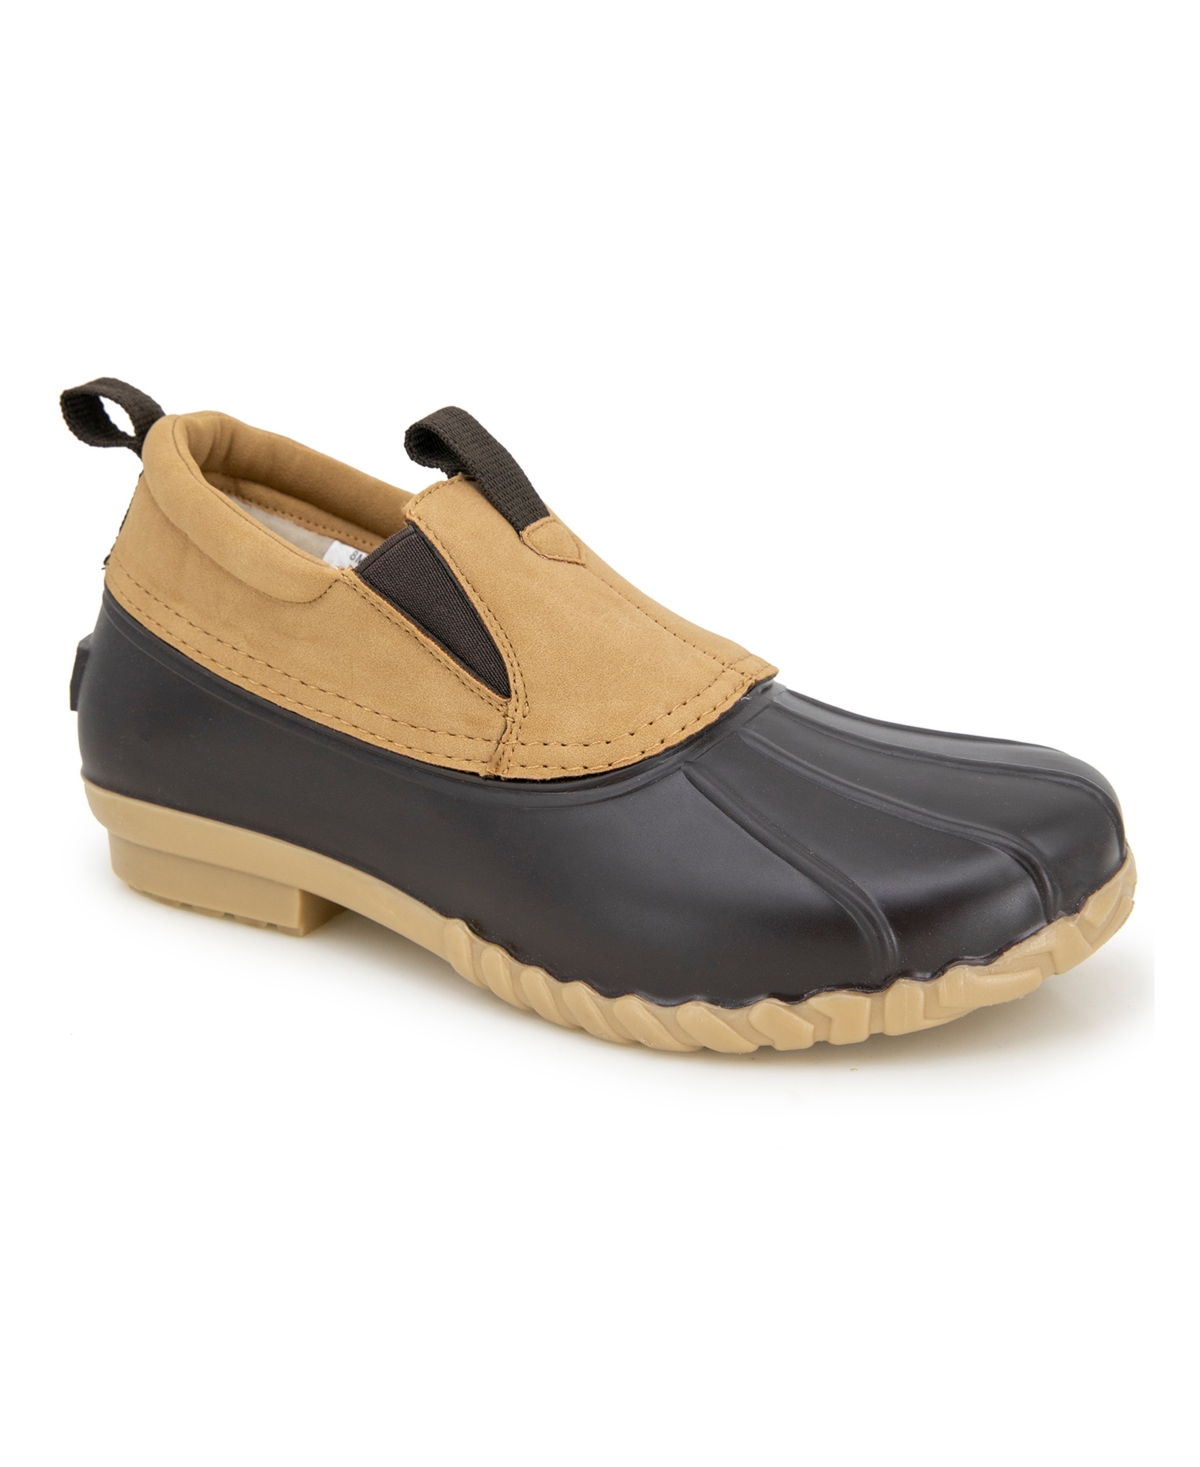 Jbu Men's Water Resistant Marsh Chelsea Duck Shoes In Dark Brown,beige